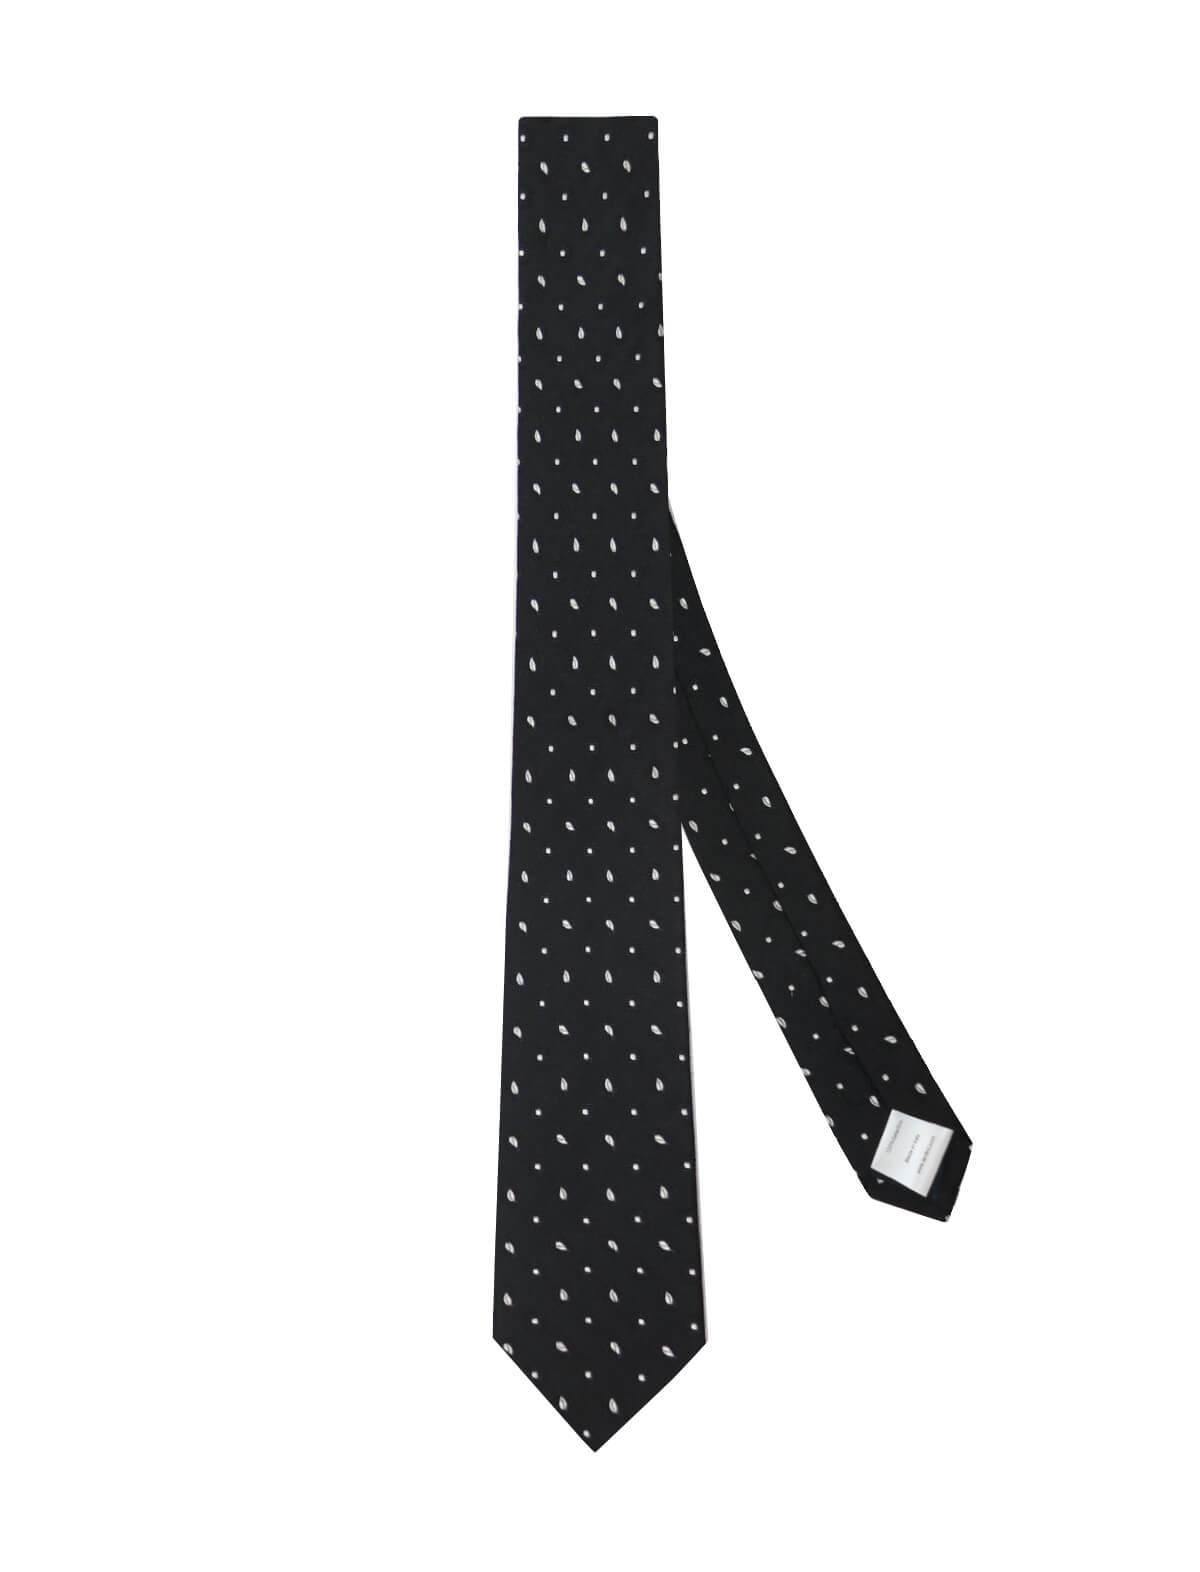 LARDINI Silk Jacquard Tie in Black and White | CLOSET Singapore